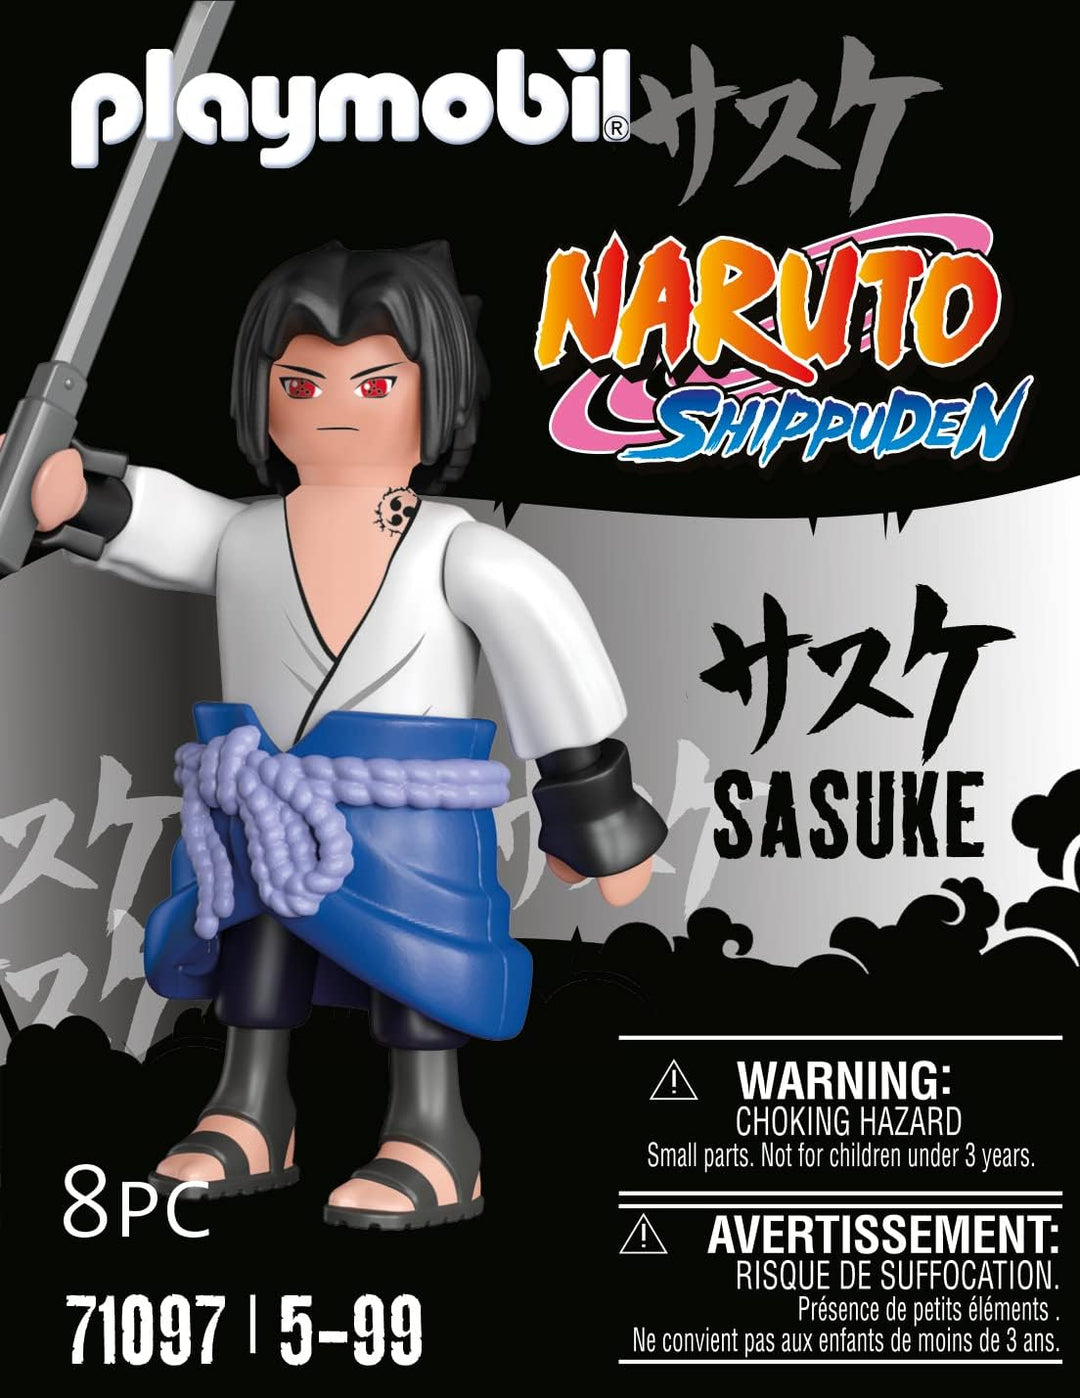 Playmobil 71097 Naruto: Sasuke Figure Set, Naruto Shippuden anime collectors Figure